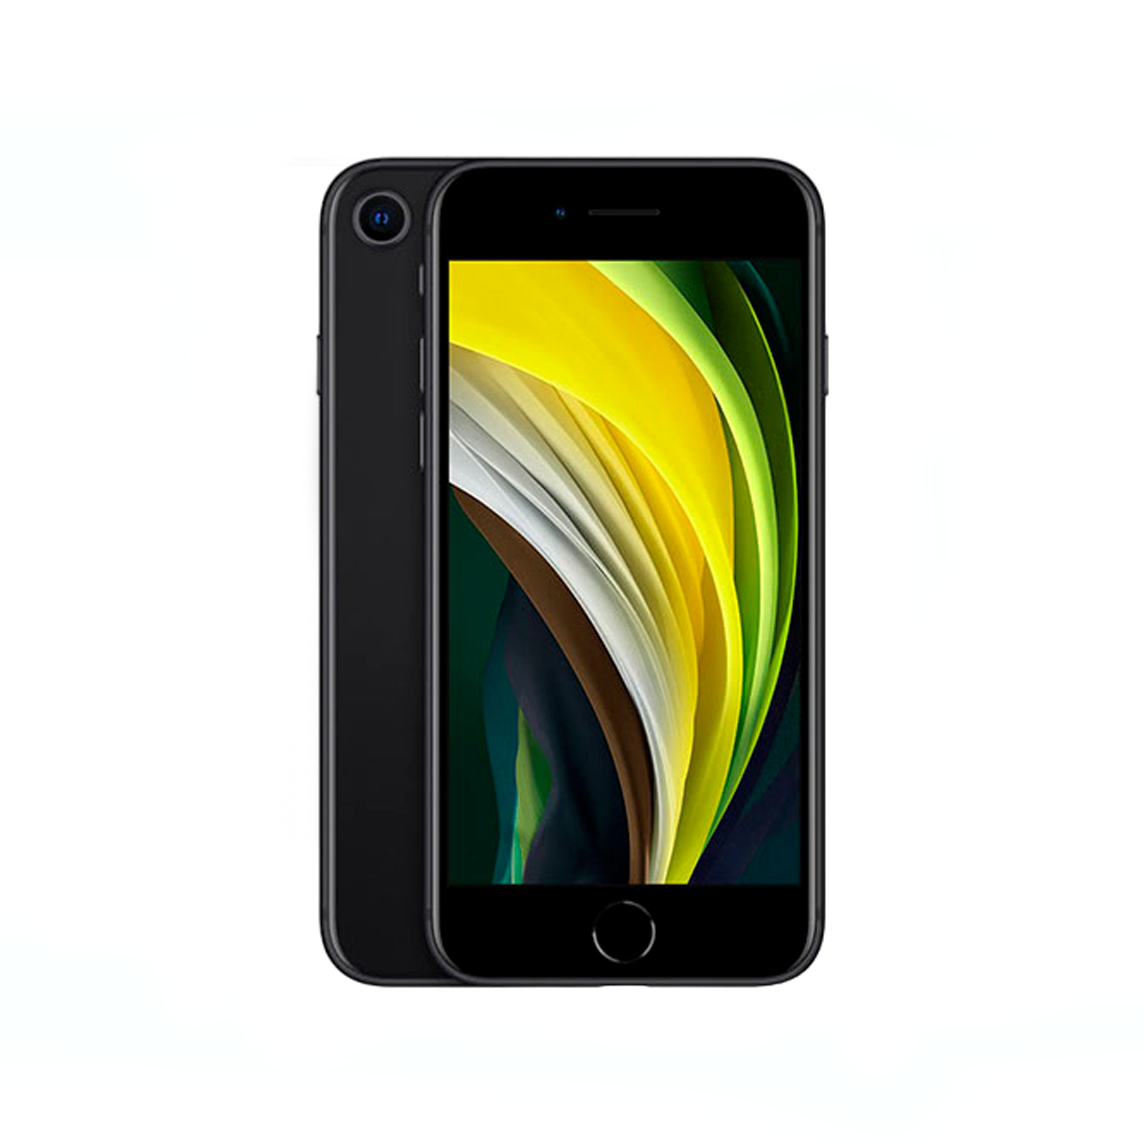 Refurbished Apple iPhone SE Unlocked Mobile Phone in Black Grey Colour